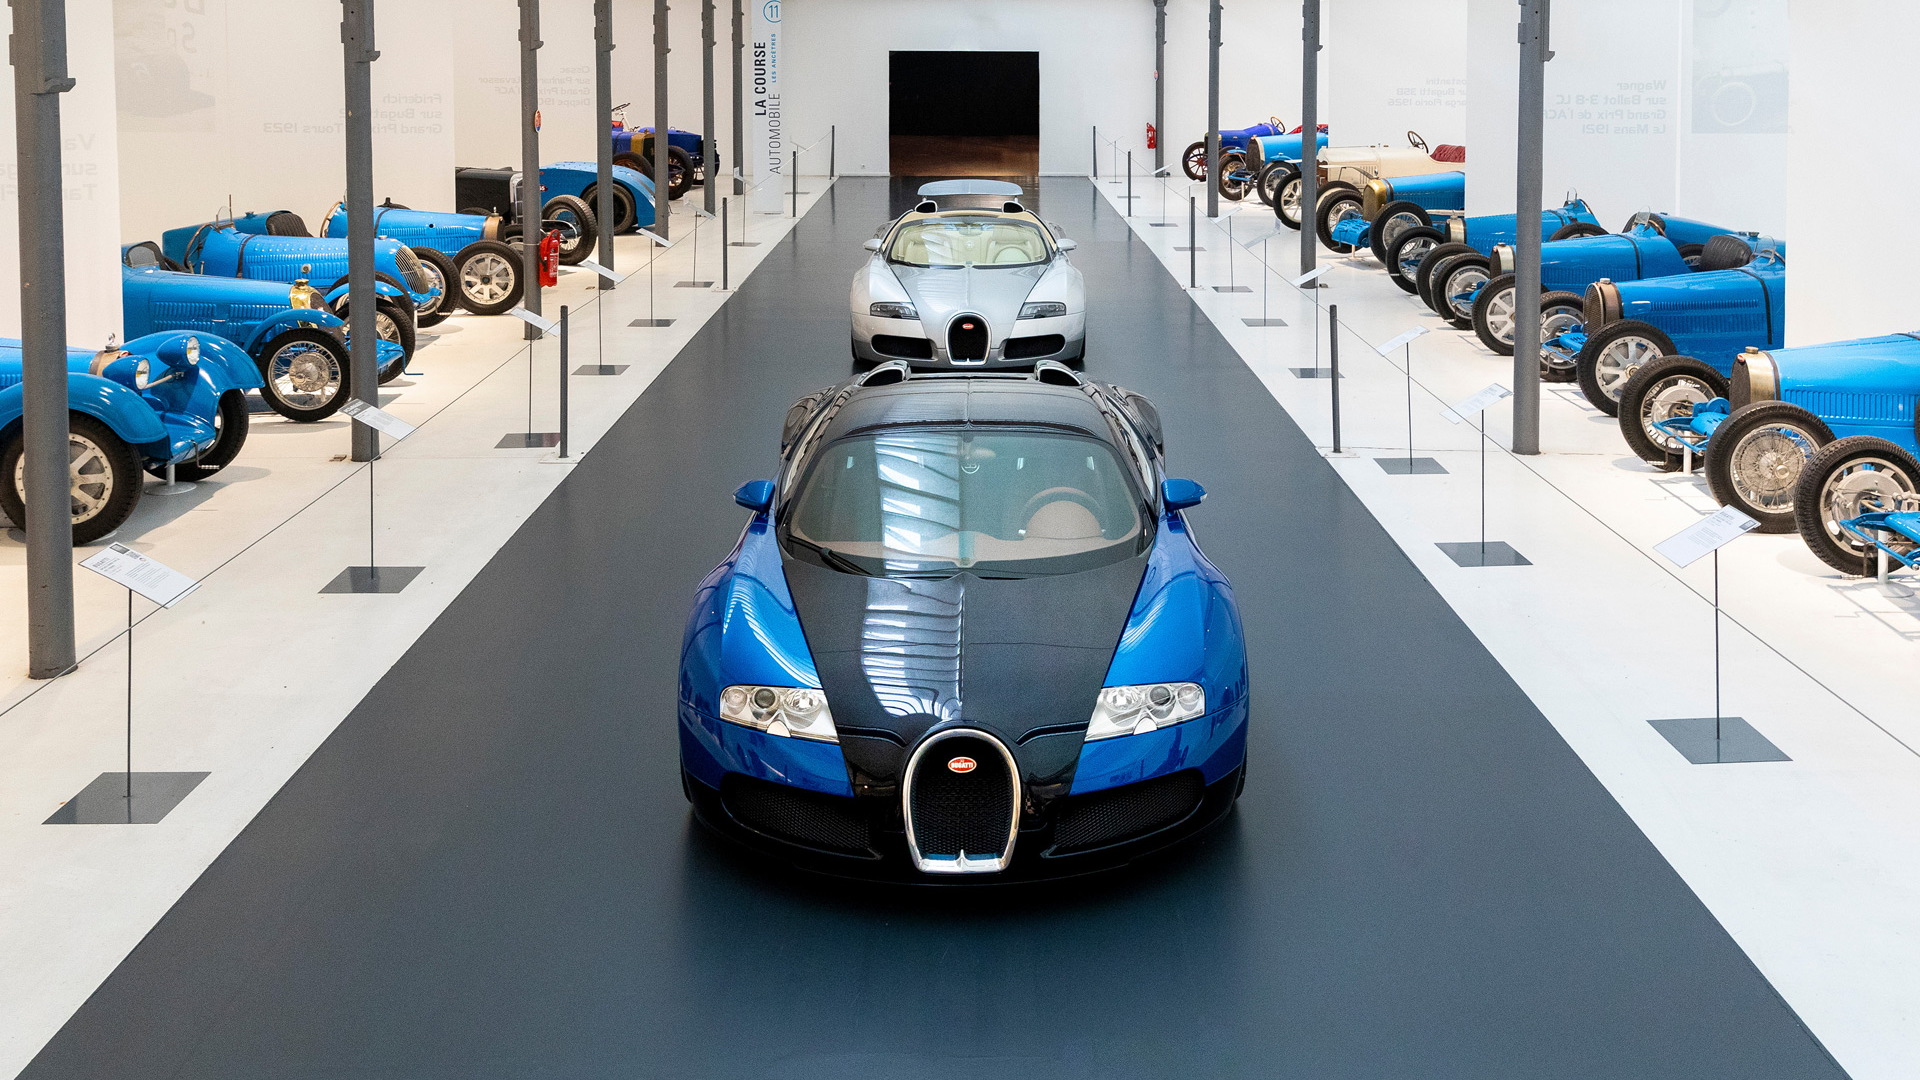 Bugatti Veyron that underwent La Maison Pur Sang restoration program